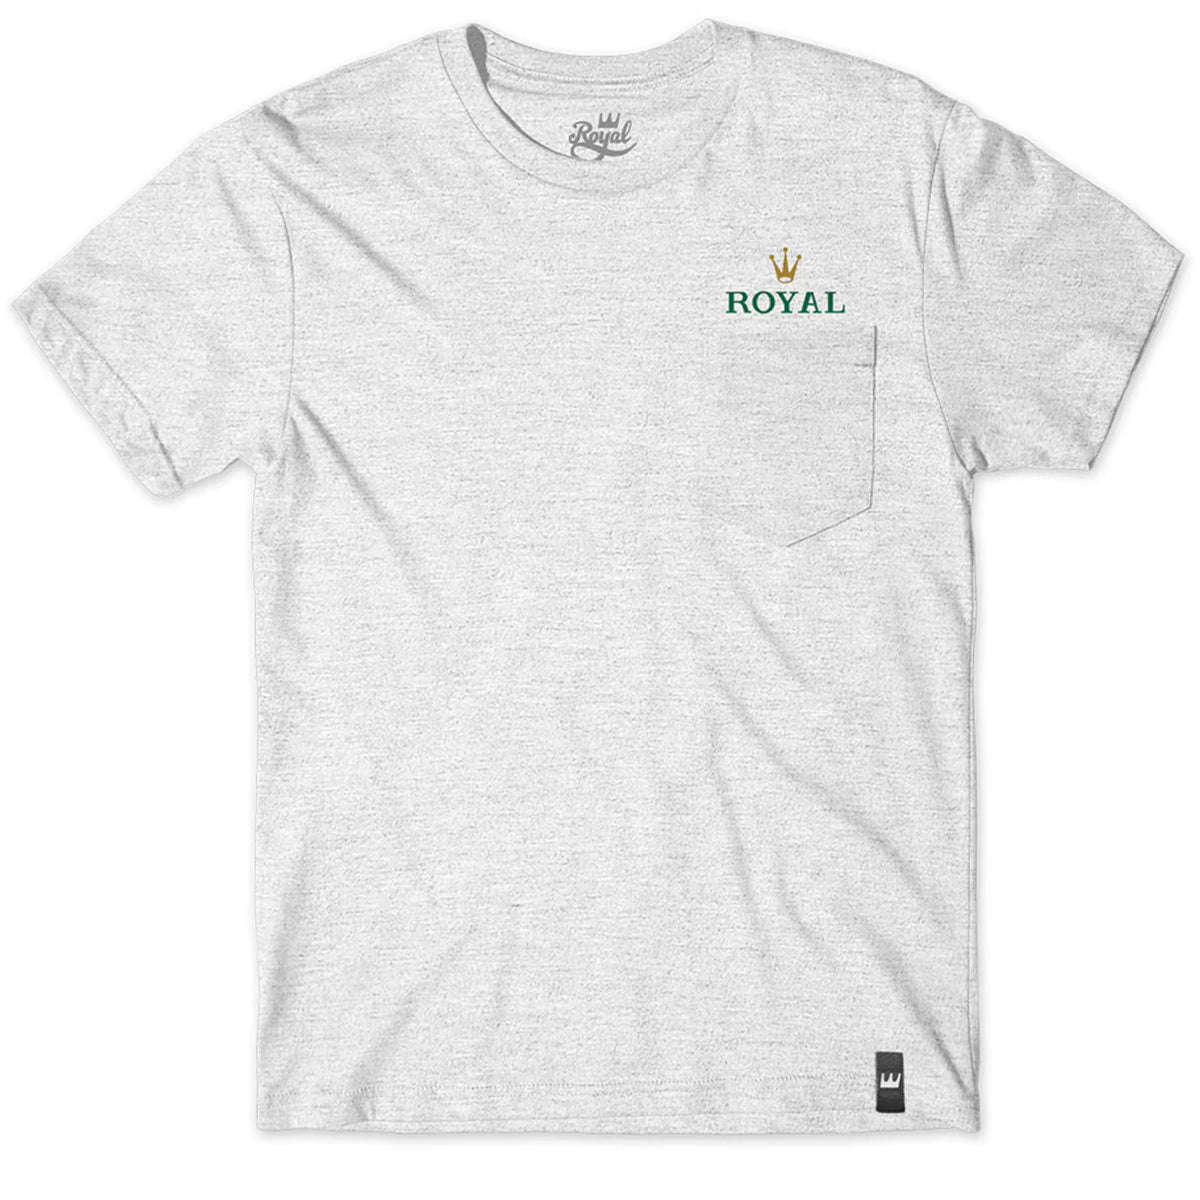 Royal Rollie Pocket T-Shirt - Heather Grey image 1